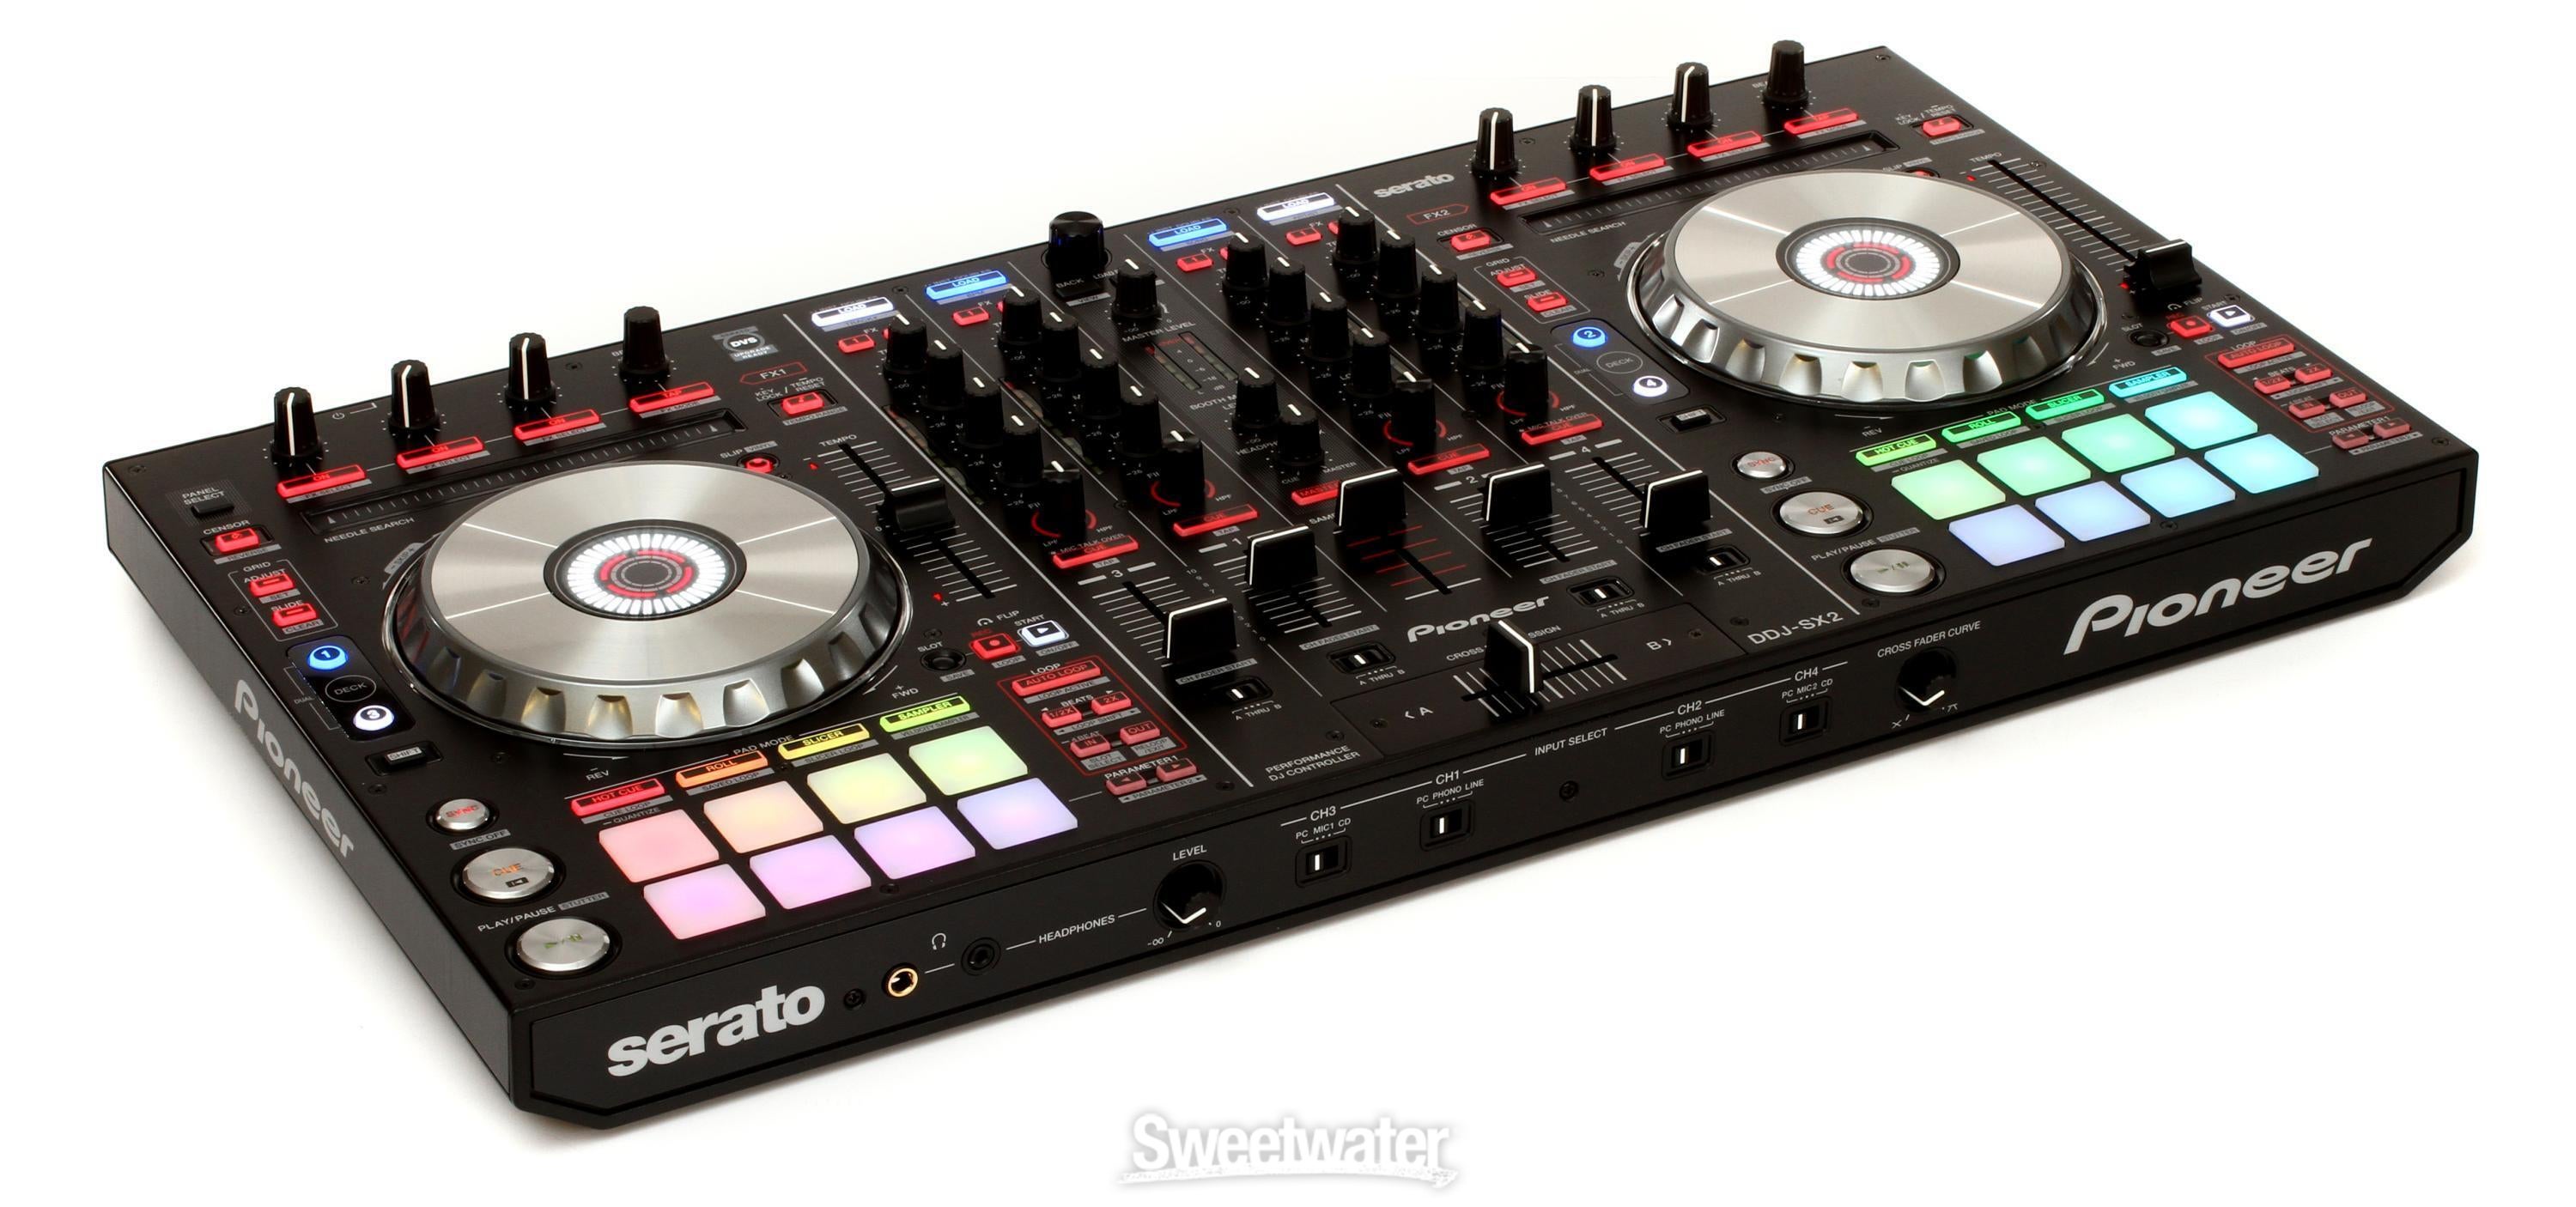 Pioneer DJ DDJ-SX2 4-deck Serato DJ Pro Controller | Sweetwater